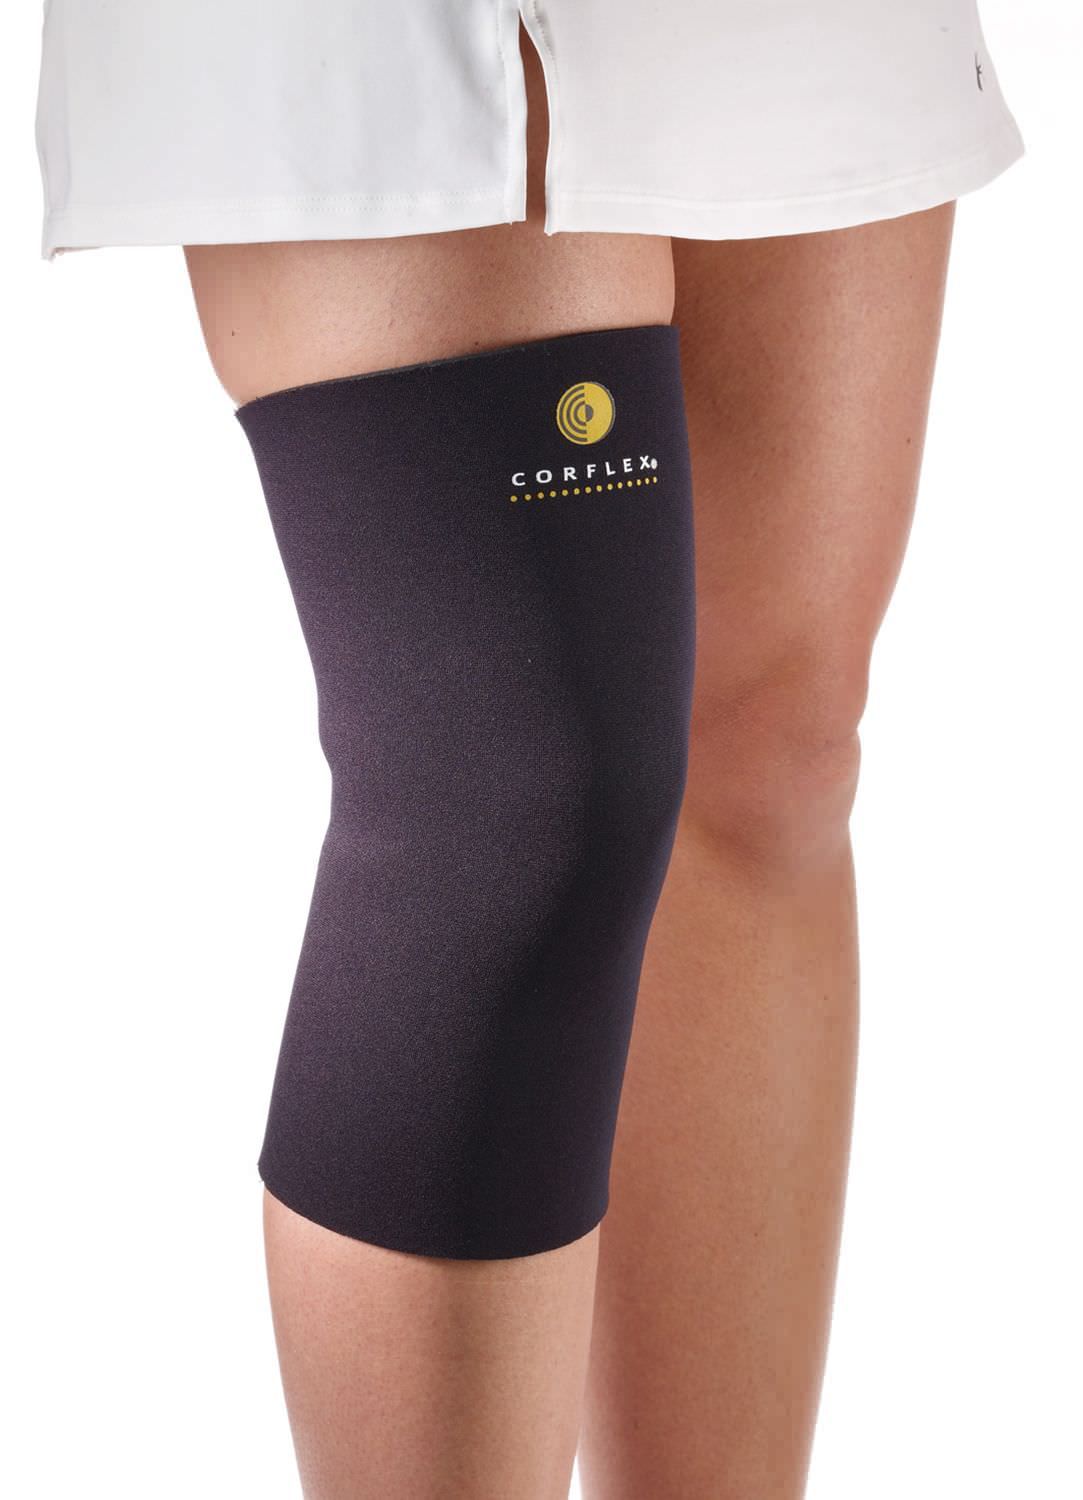 Knee sleeve (orthopedic immobilization) 88-00, 88-01 Corflex